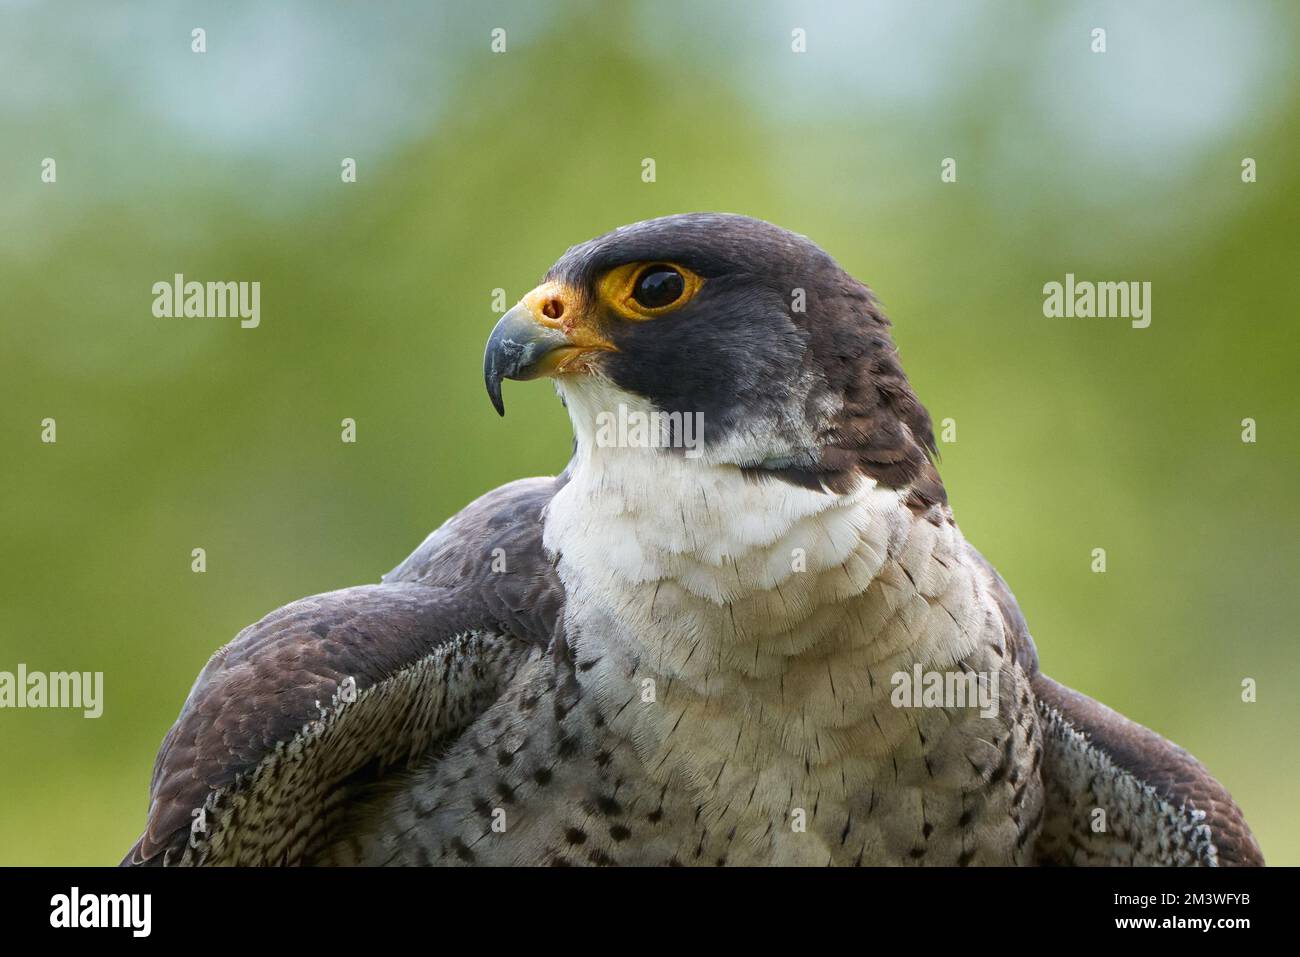 A closeup of a shaheen falcon (Falco peregrinus peregrinator) on a blurred background Stock Photo